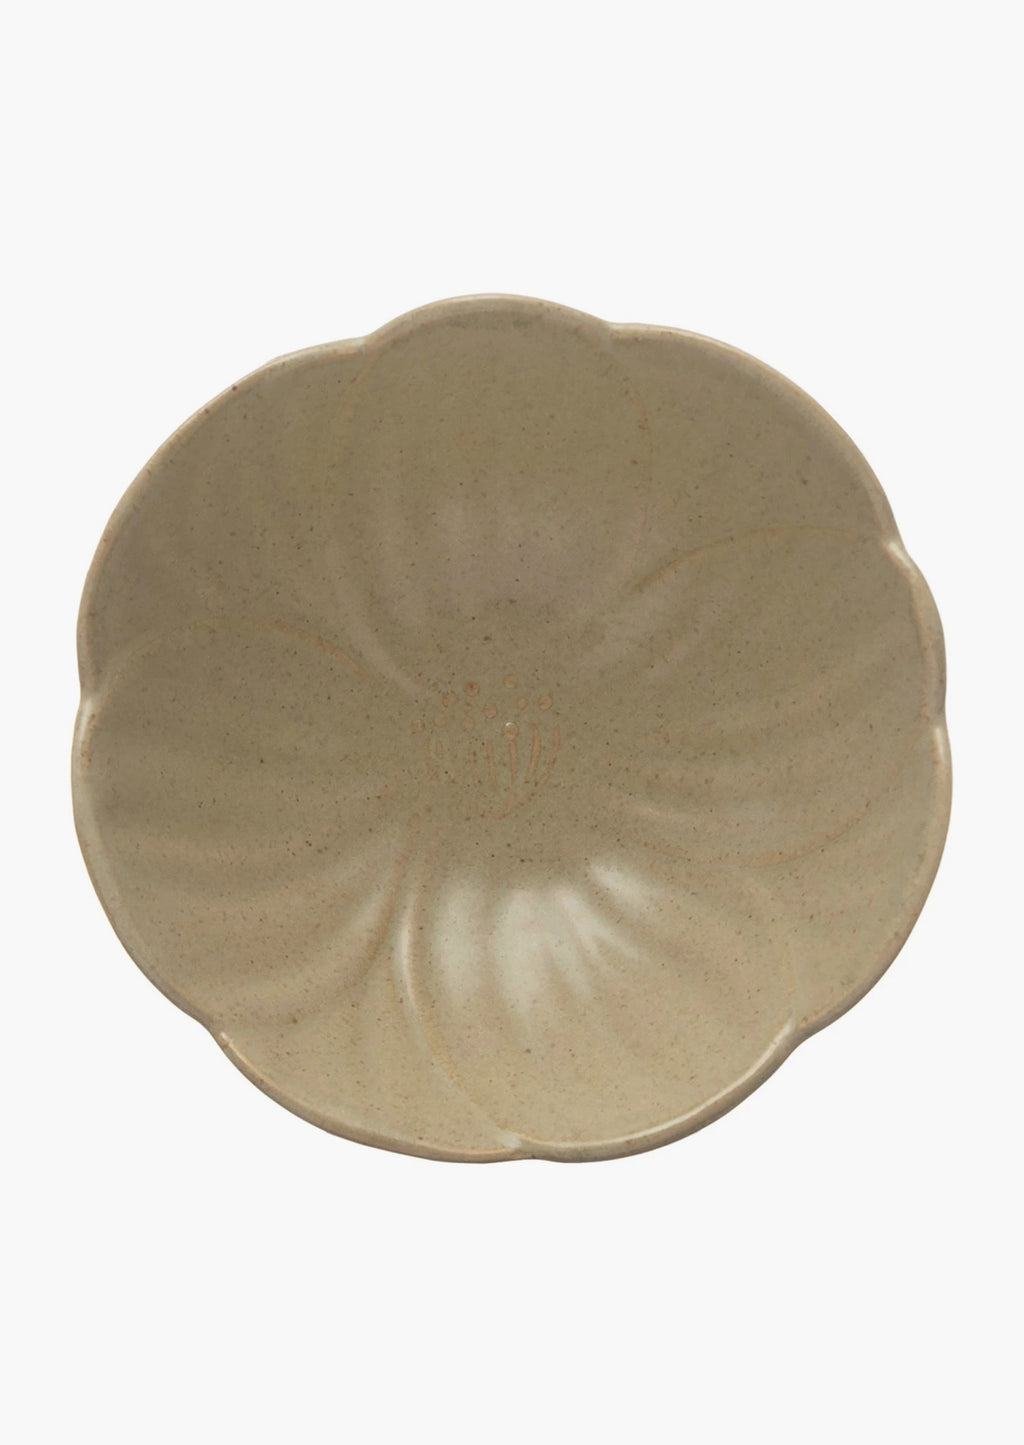 3: A tan ceramic flower shaped bowl.